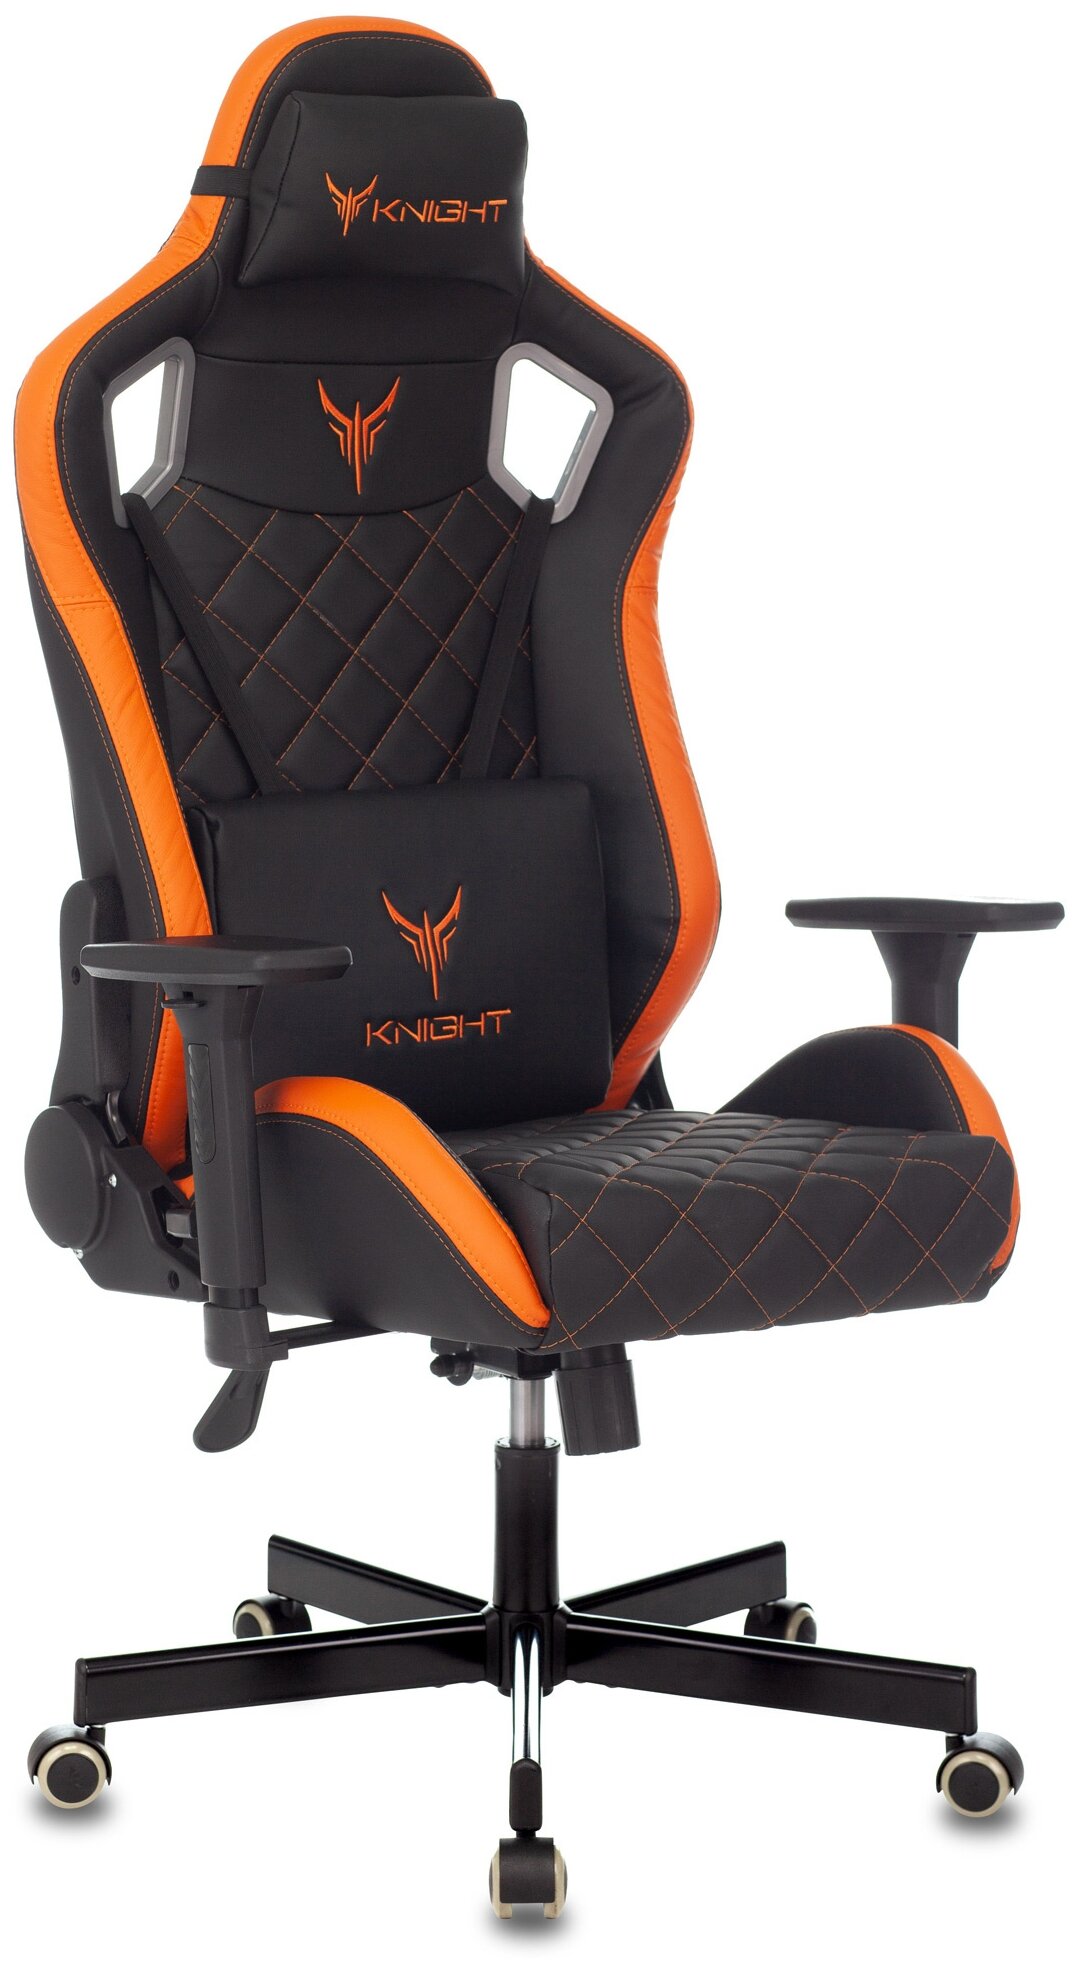 Кресло игровое Knight Outrider черный/оранжевый (knight outrider bo)